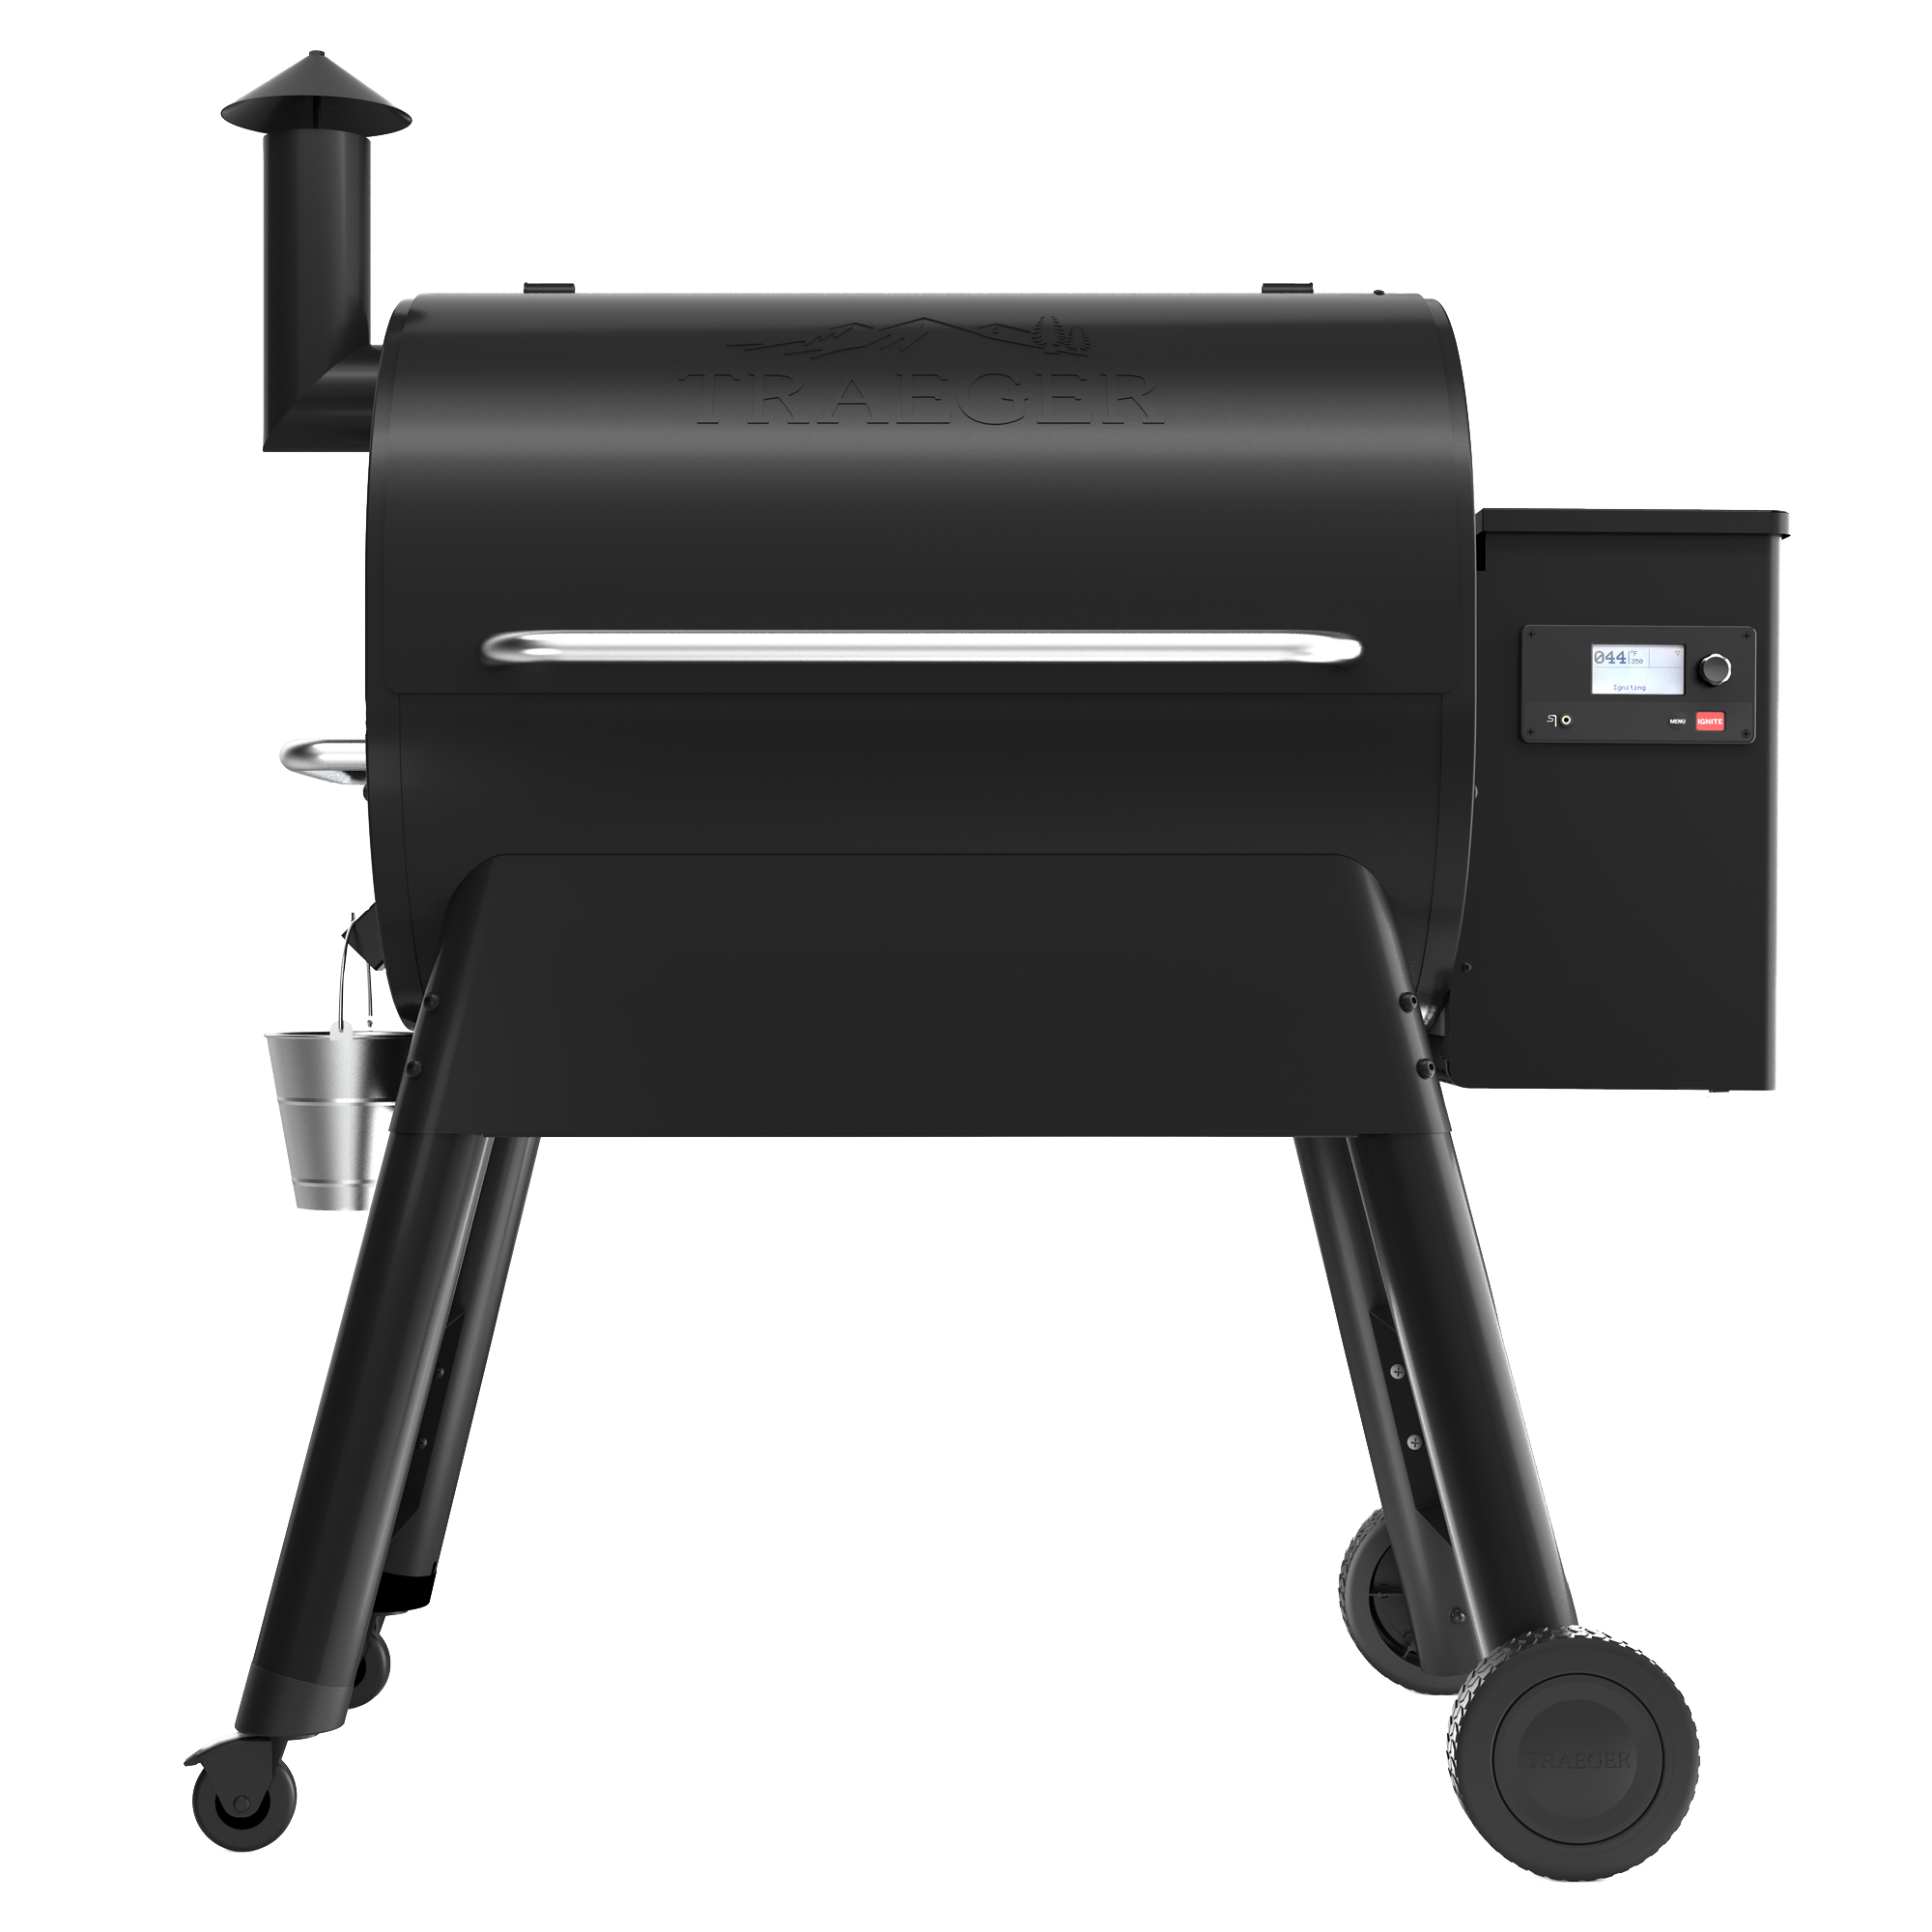 Traeger Pellet Grills Pro 780 Wood Pellet Grill and Smoker - Black - image 1 of 11